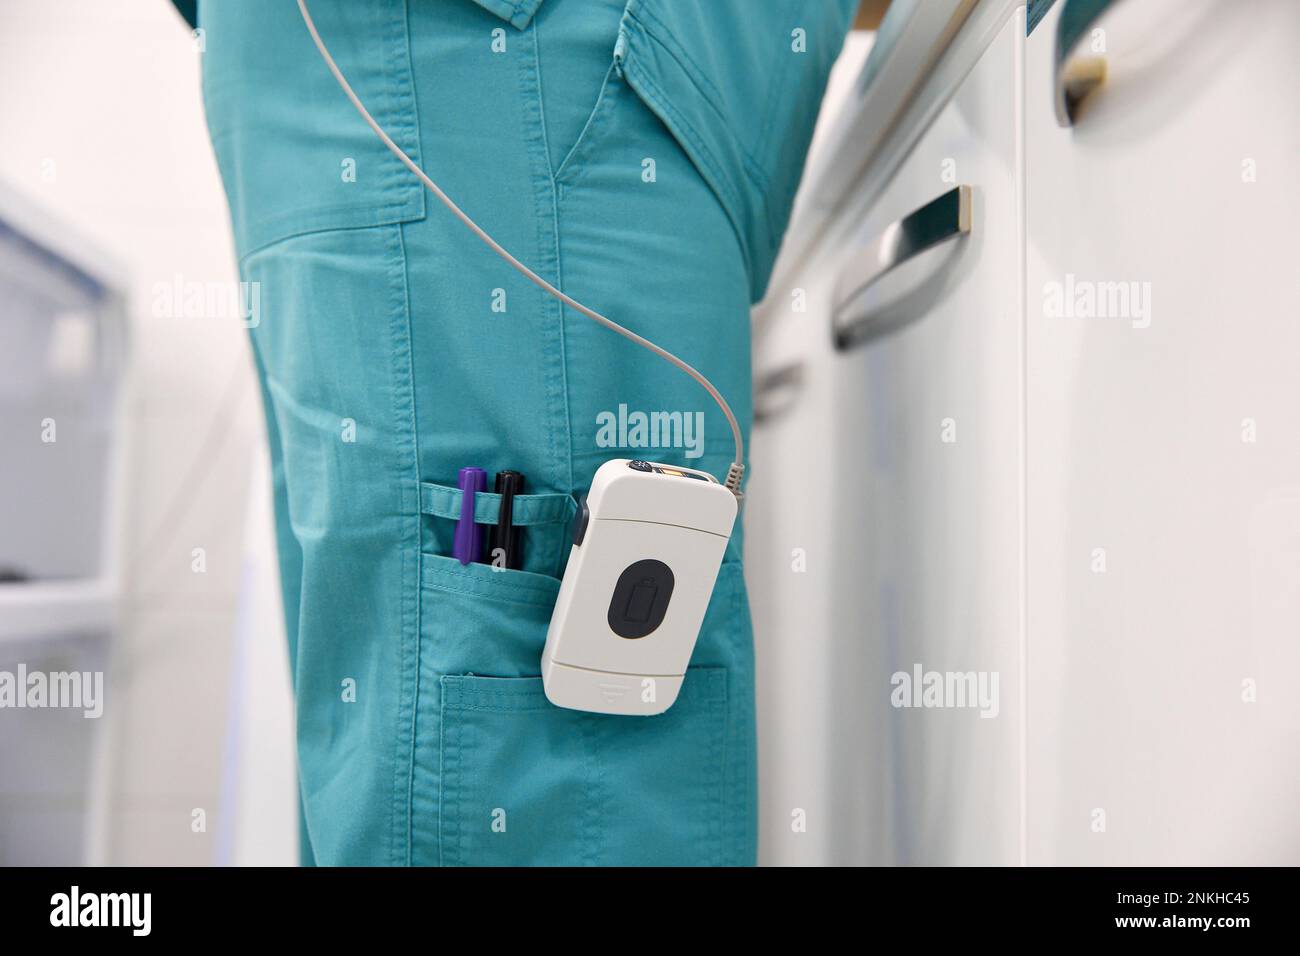 Electronic equipment on doctor's uniform Stock Photo